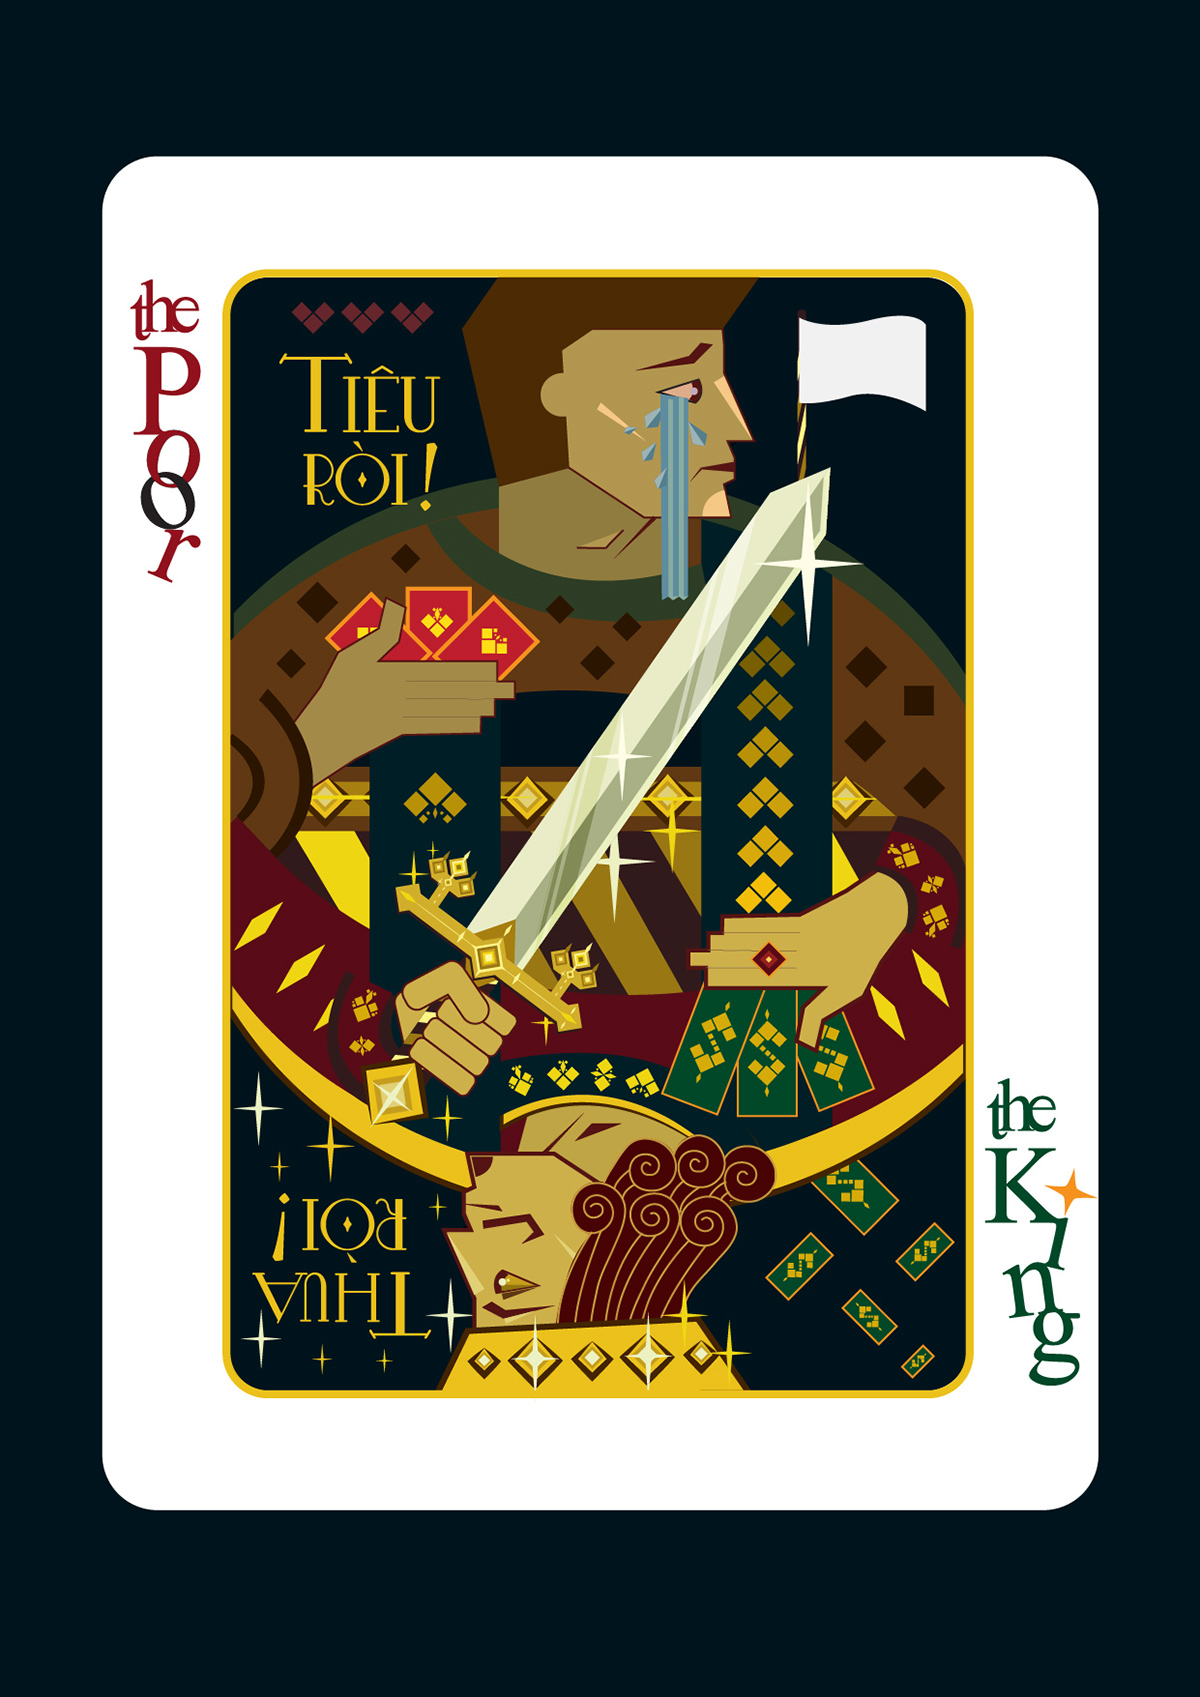 king poor Playing Cards saigon quynhhuong Illustrator ai flat design elements